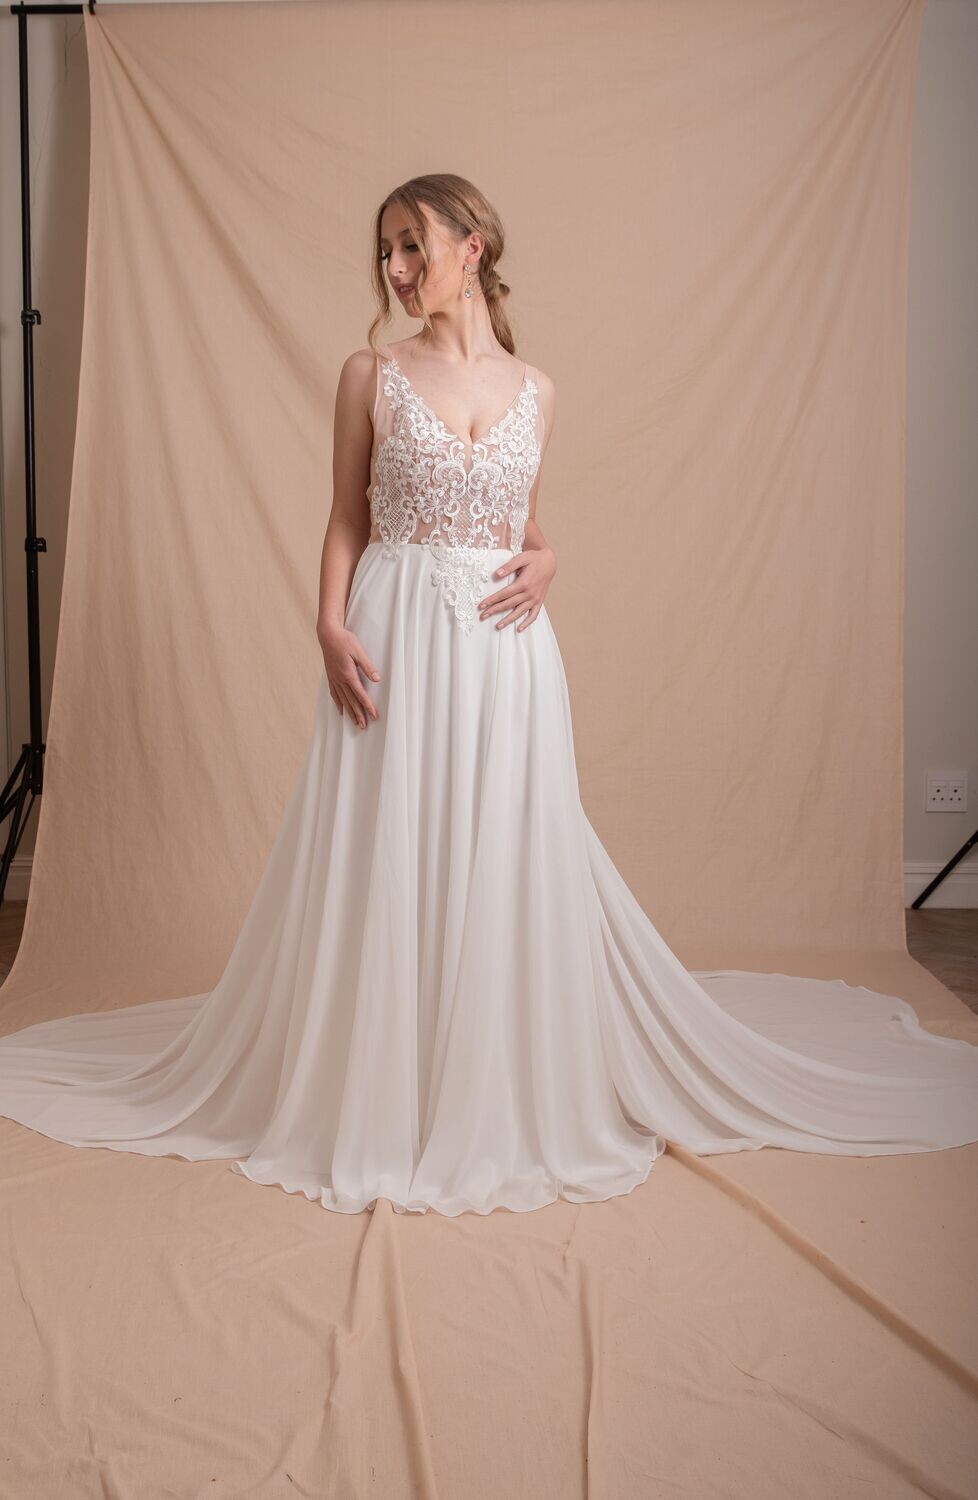 CEIRA - Lace Applique Aline Wedding Gown